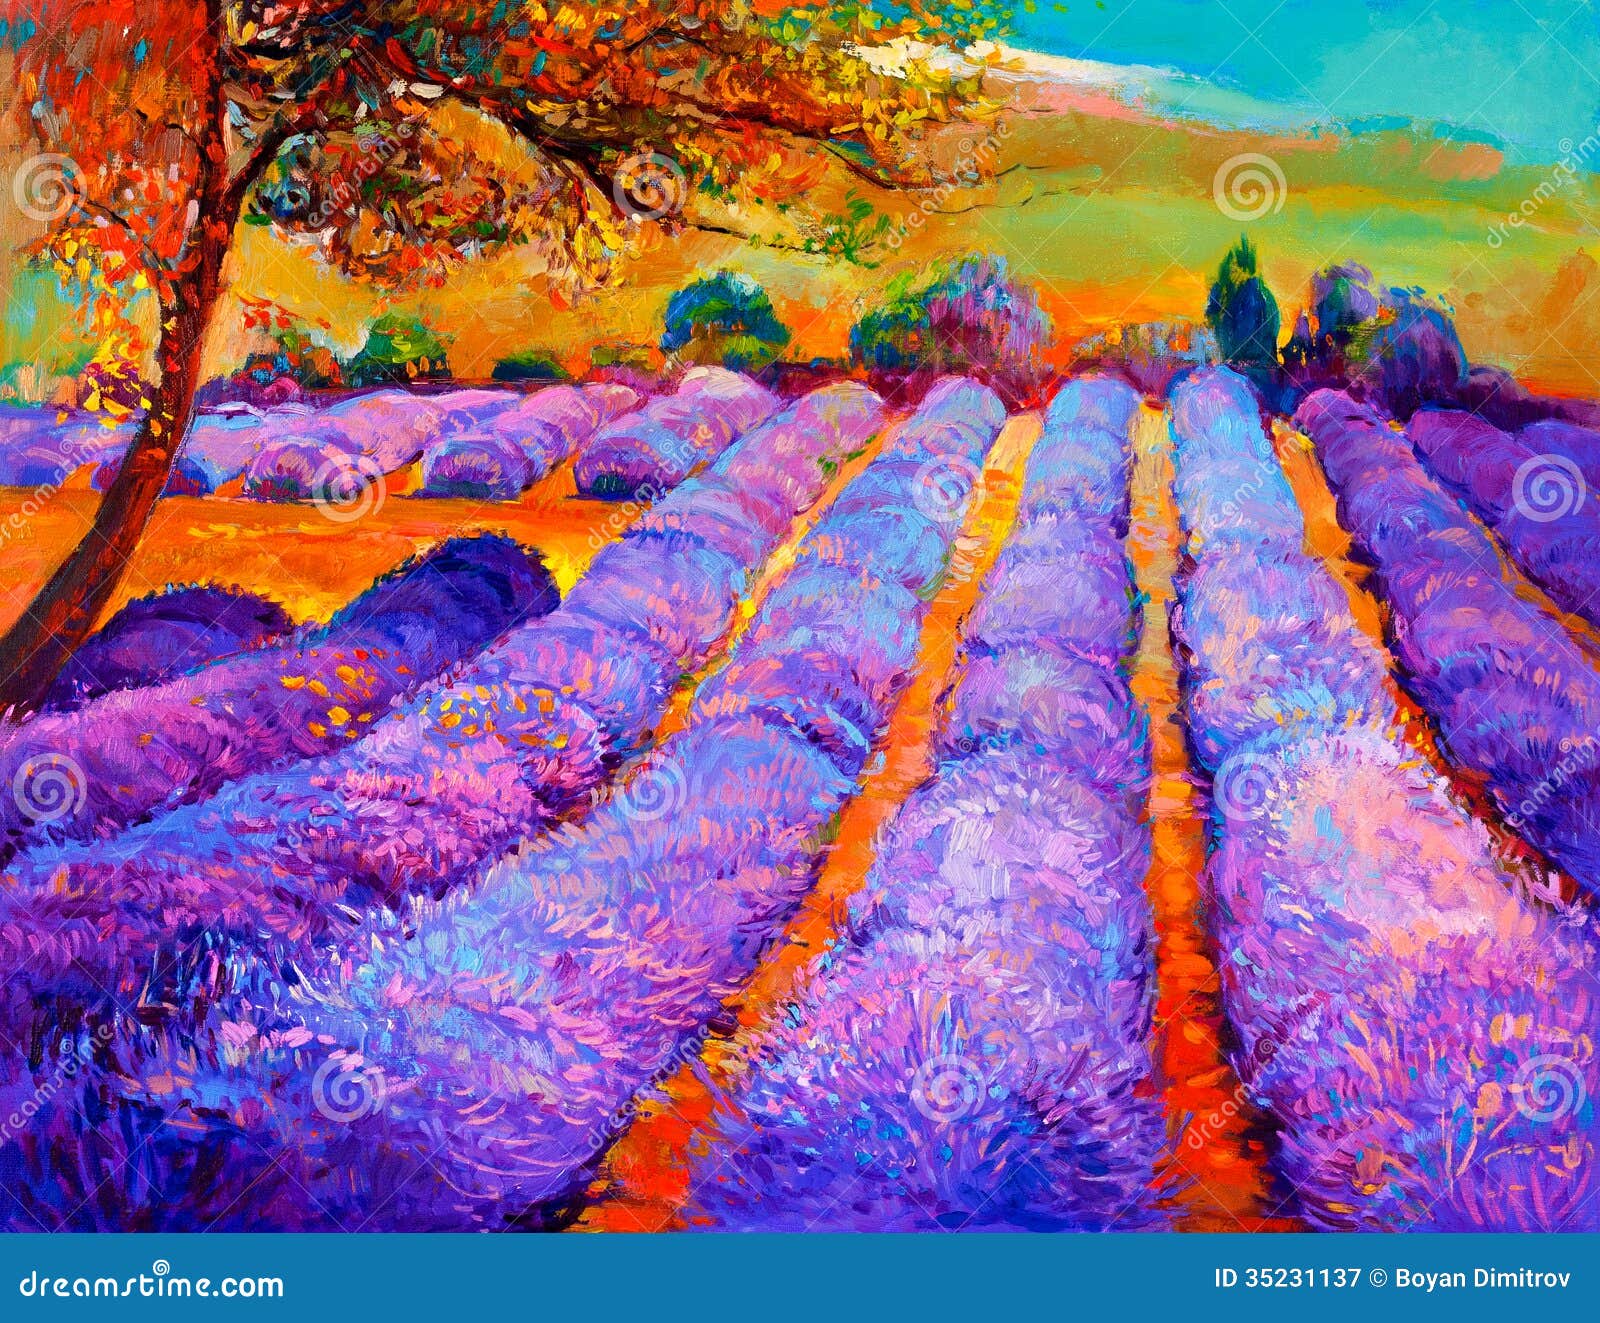 Original oil painting of lavender fields on canvas.Sunset landscape 